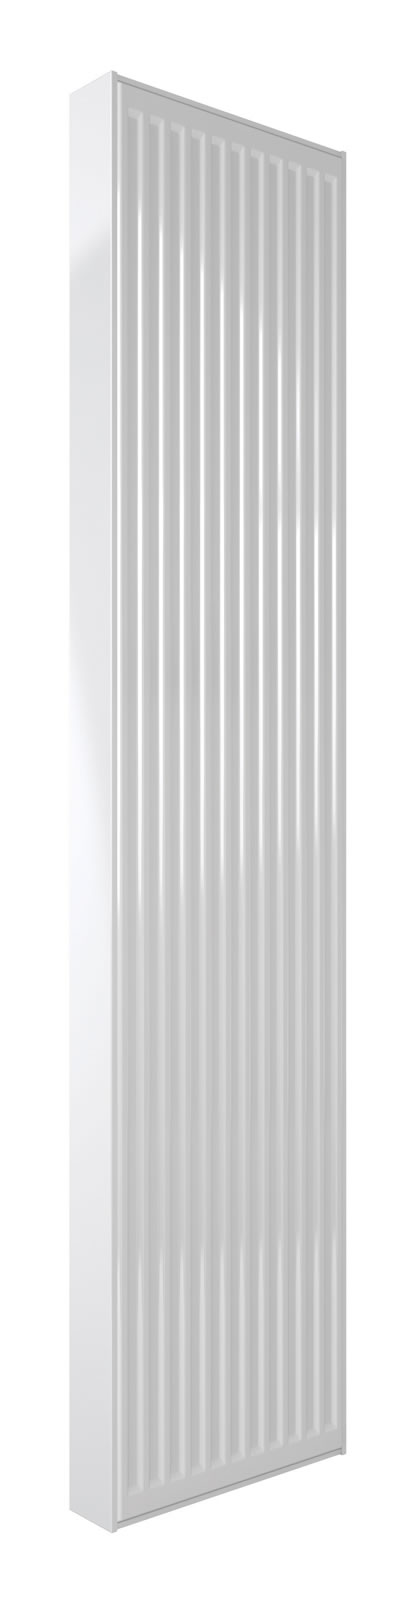 Stelrad Vita Compact Vertical radiator loyalty reward